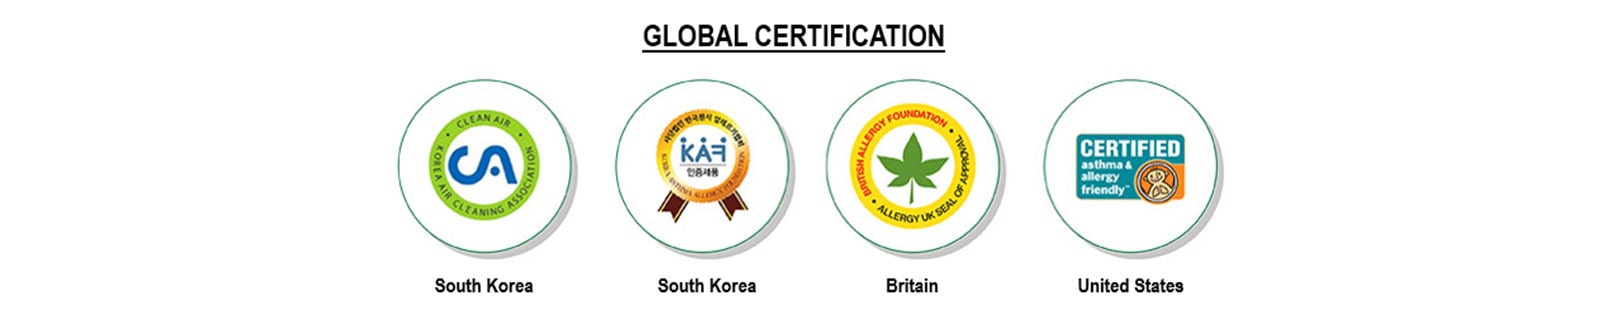 Global_Certification_D-V1